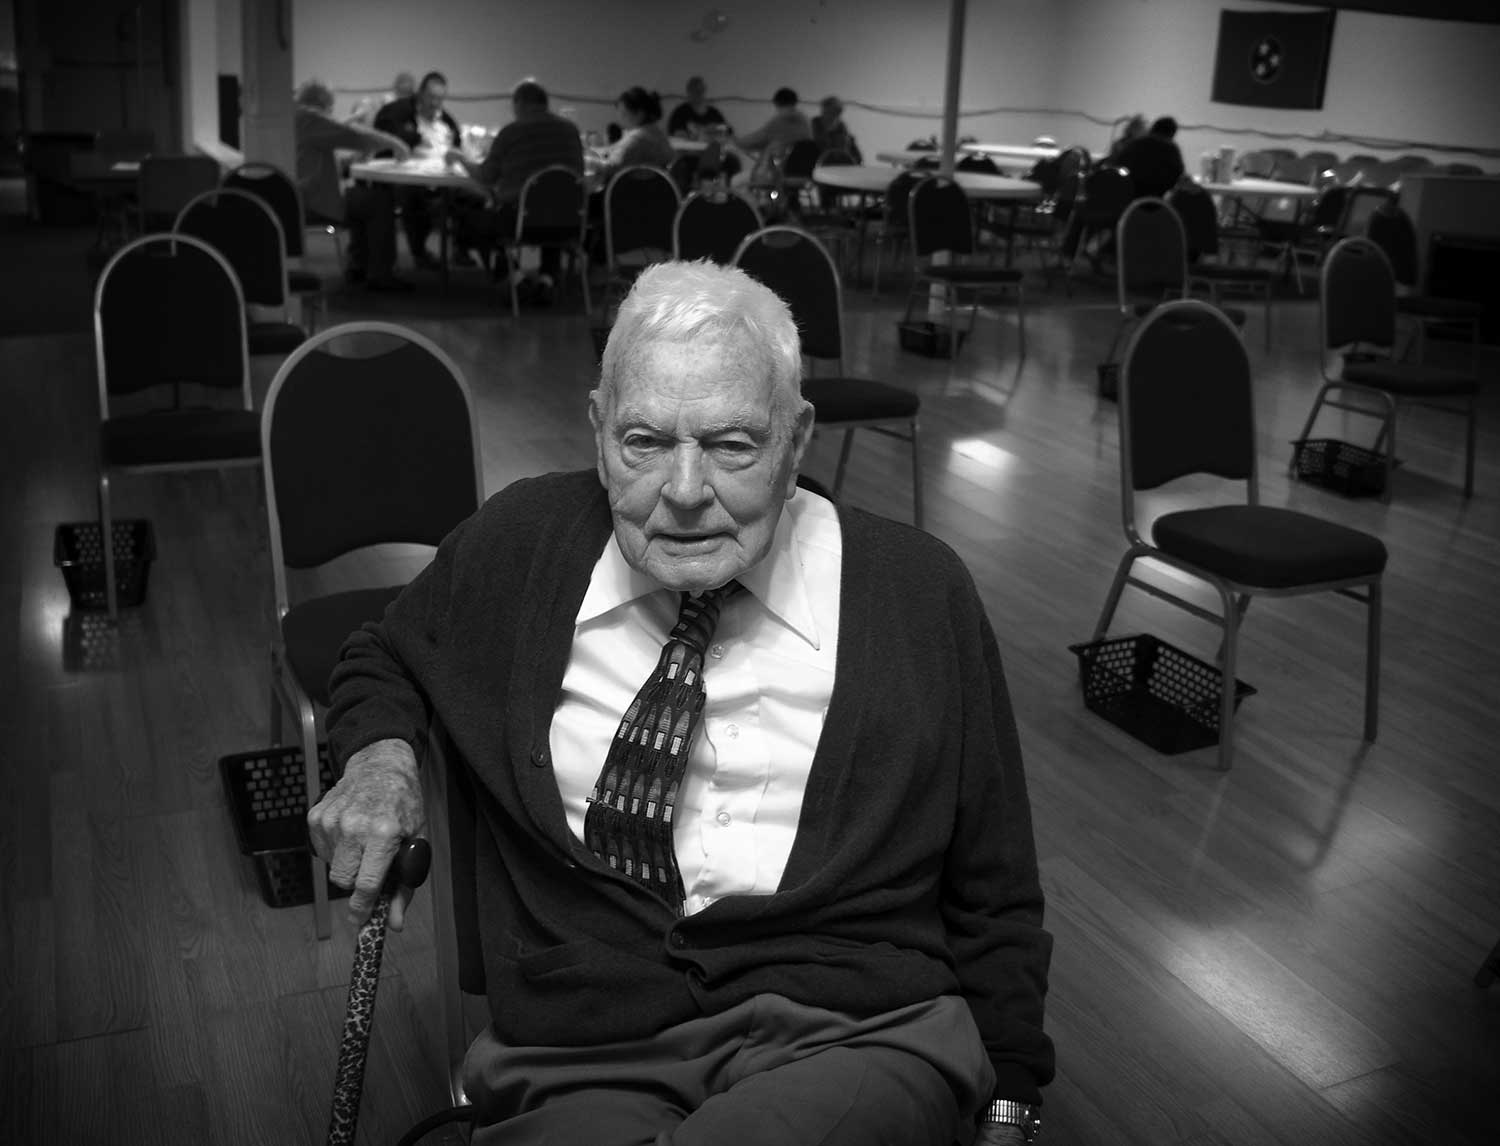 A veteran of three wars, William Morton, known as Colonel, waits for the silver sneakers class at the Senior Center. photo by Natasha Zalewski - 2014